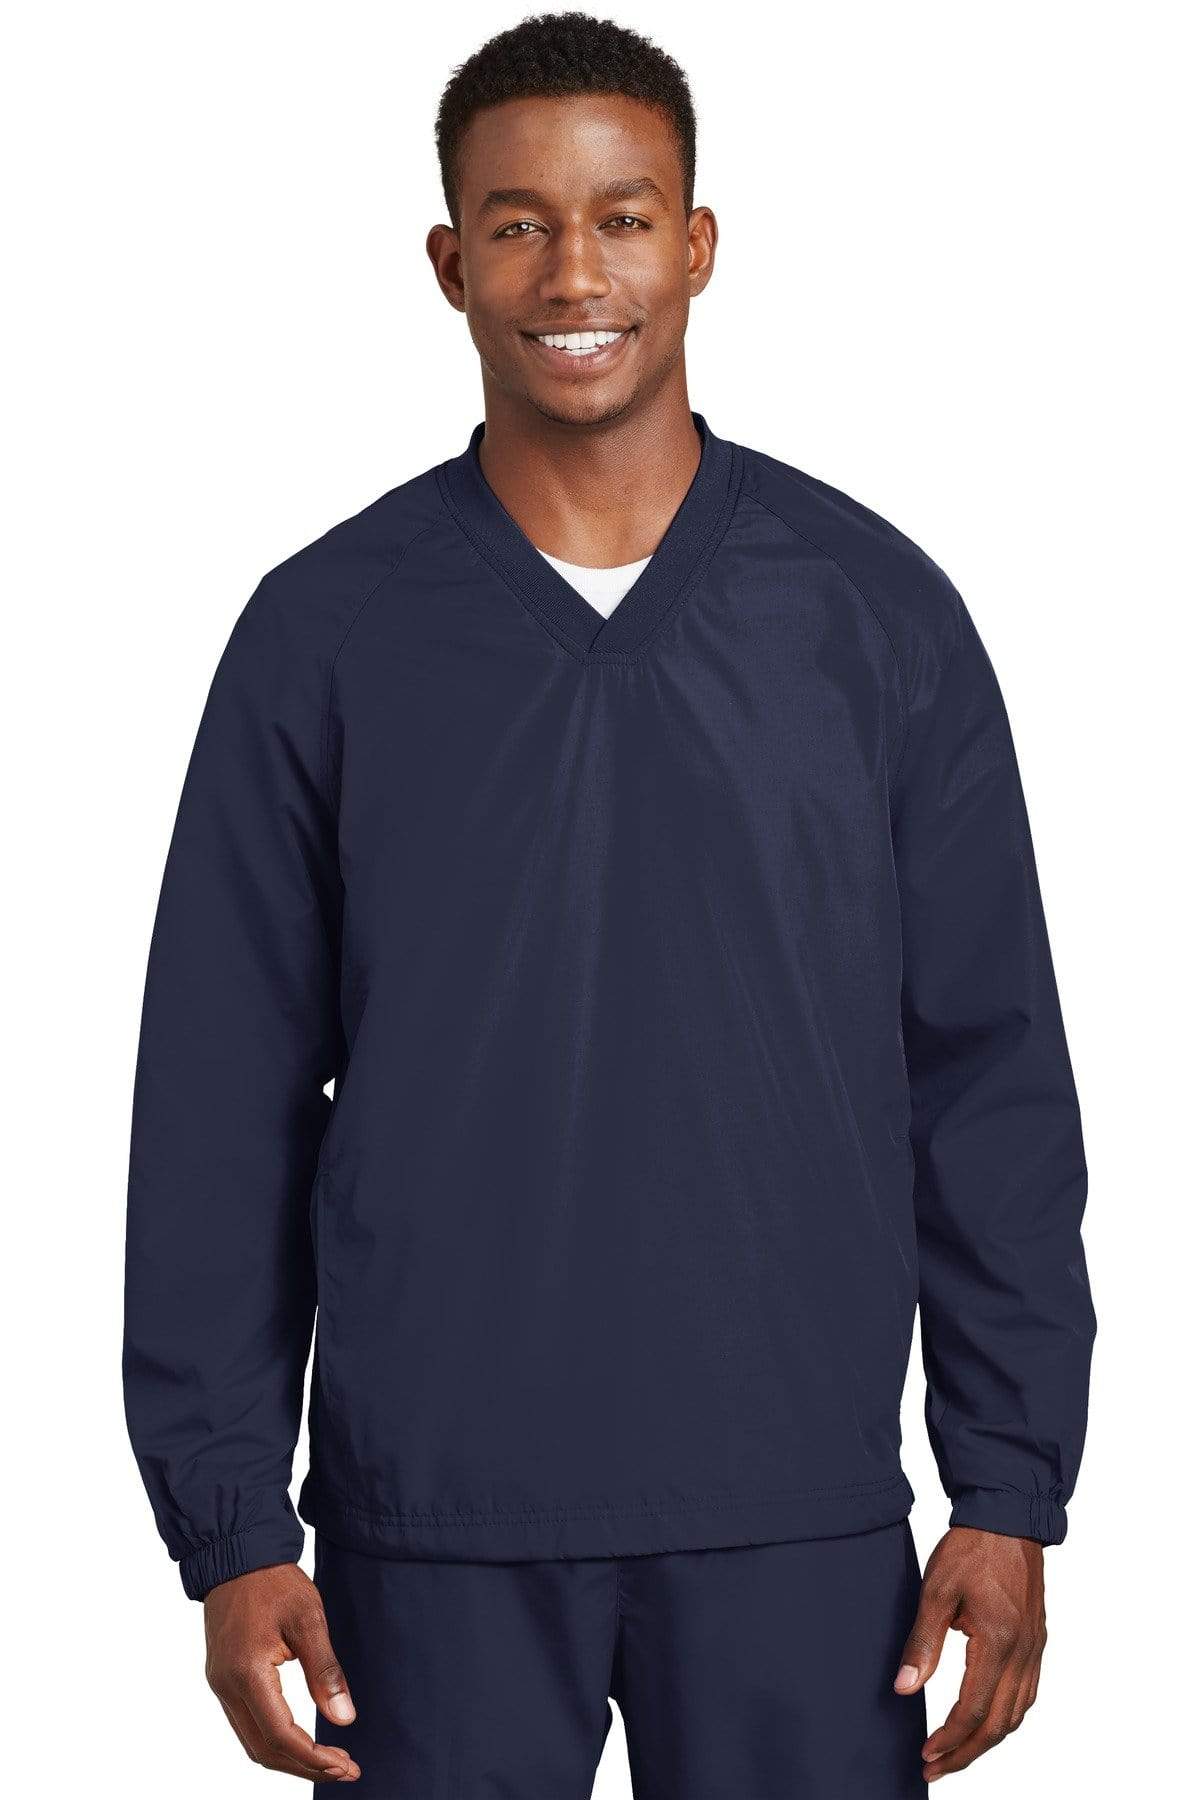 Sport-Tek V-Neck Windbreaker Jacket Shirt JST726185